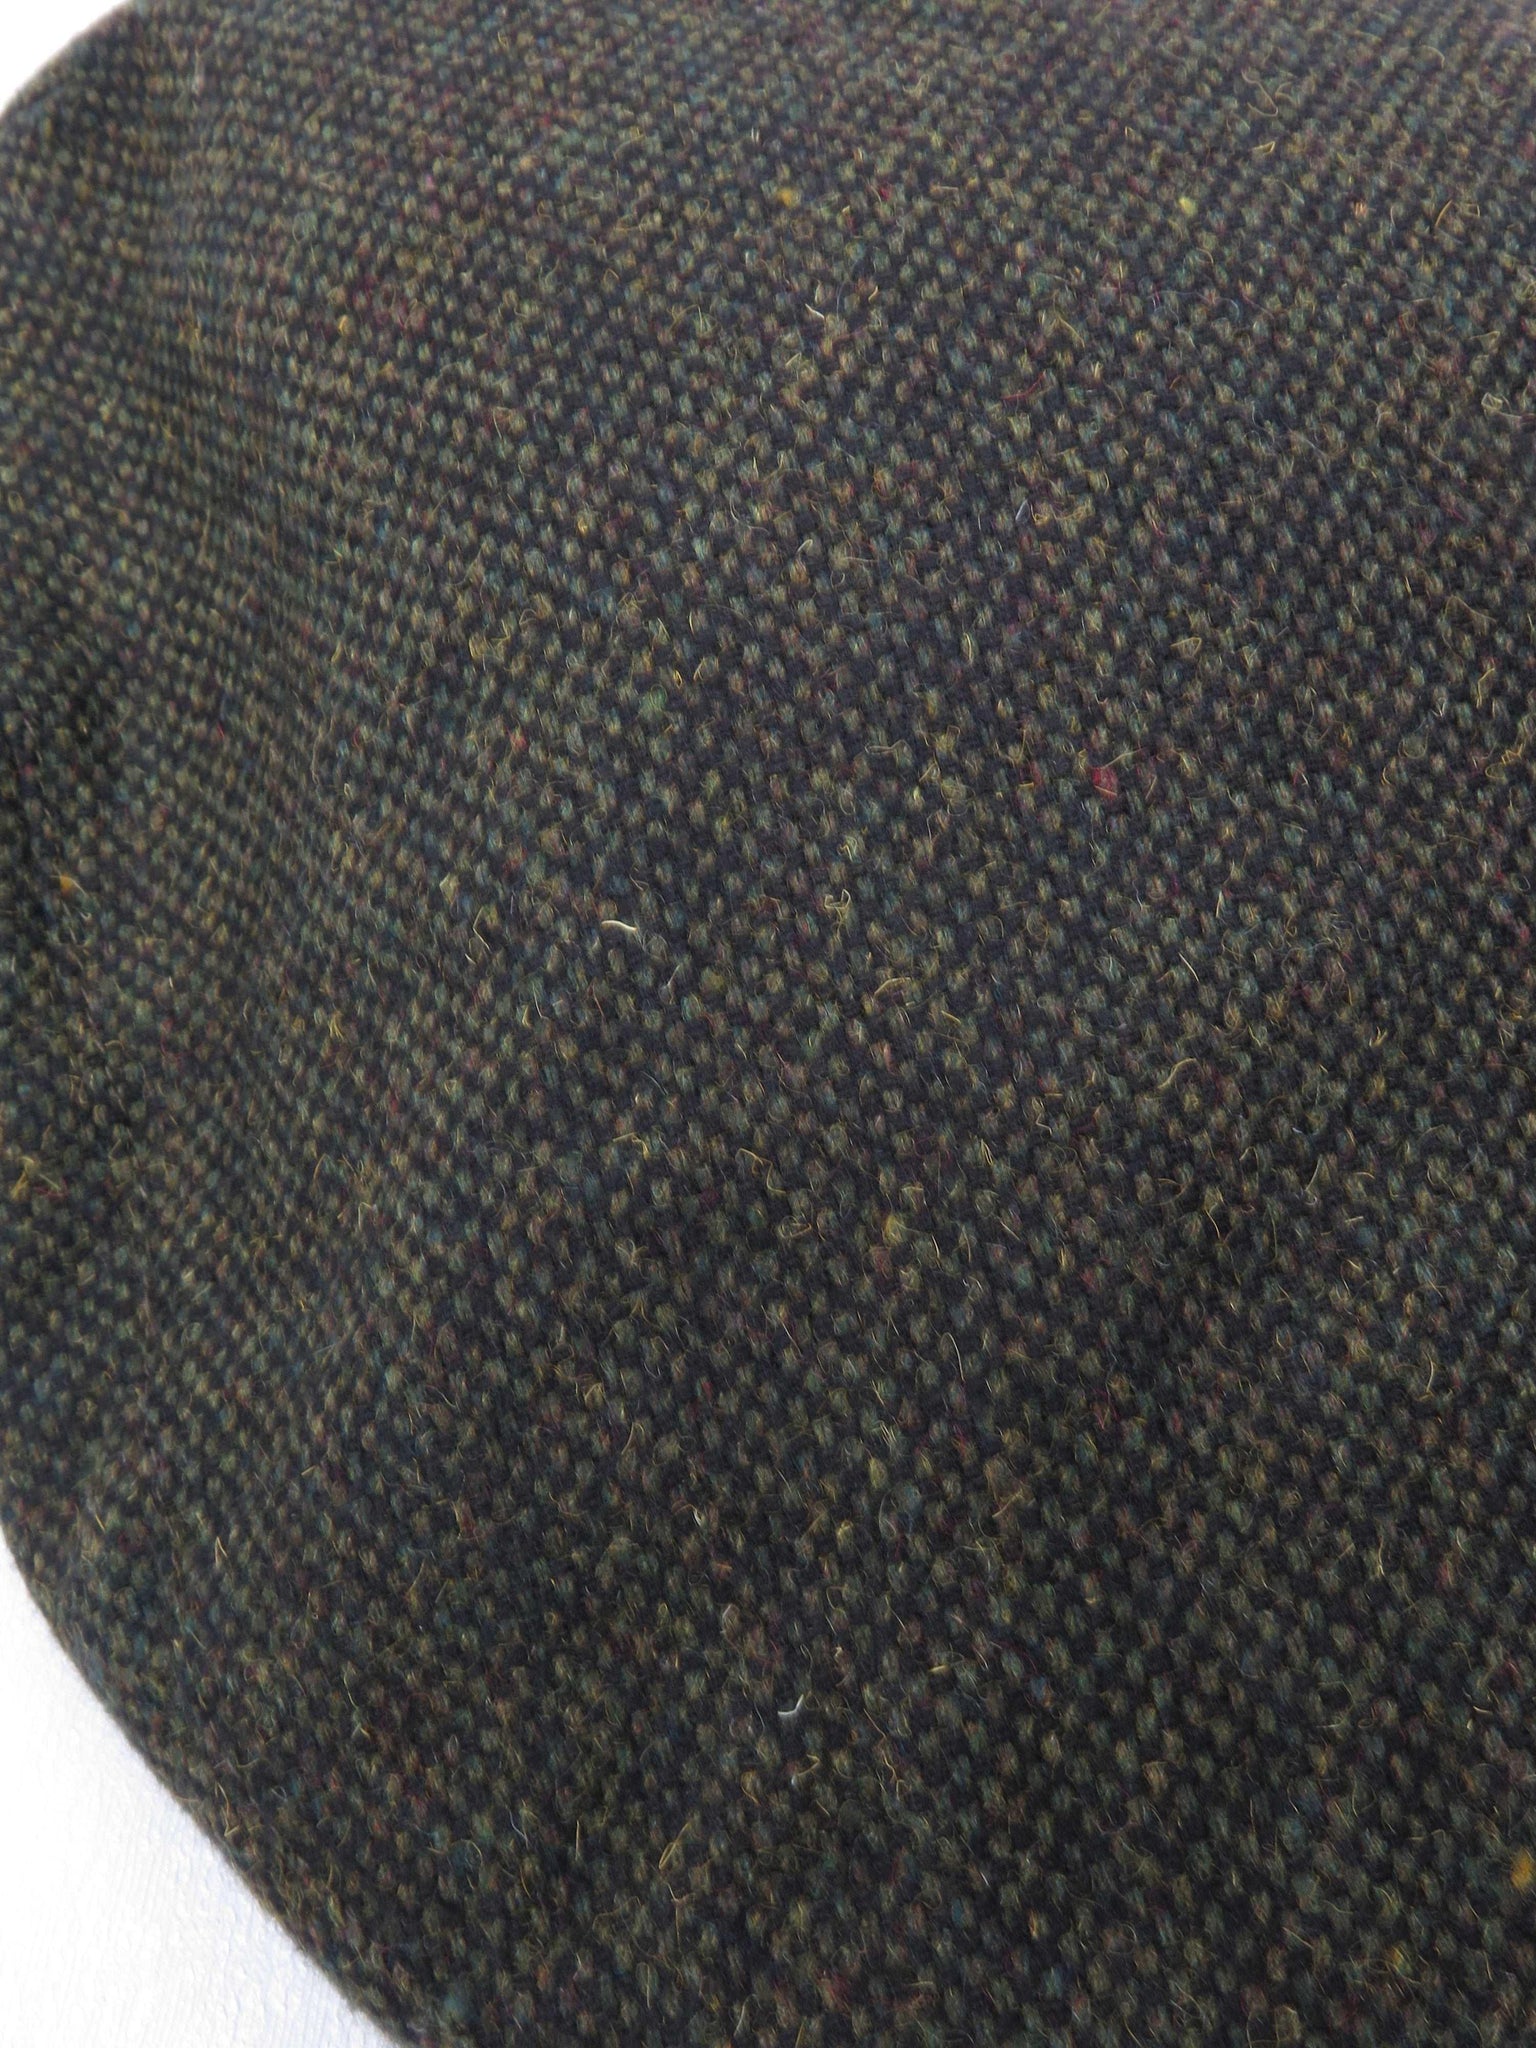 Men's Barleycorn Tweed Green /Brown  Flat Cap - The Harlequin